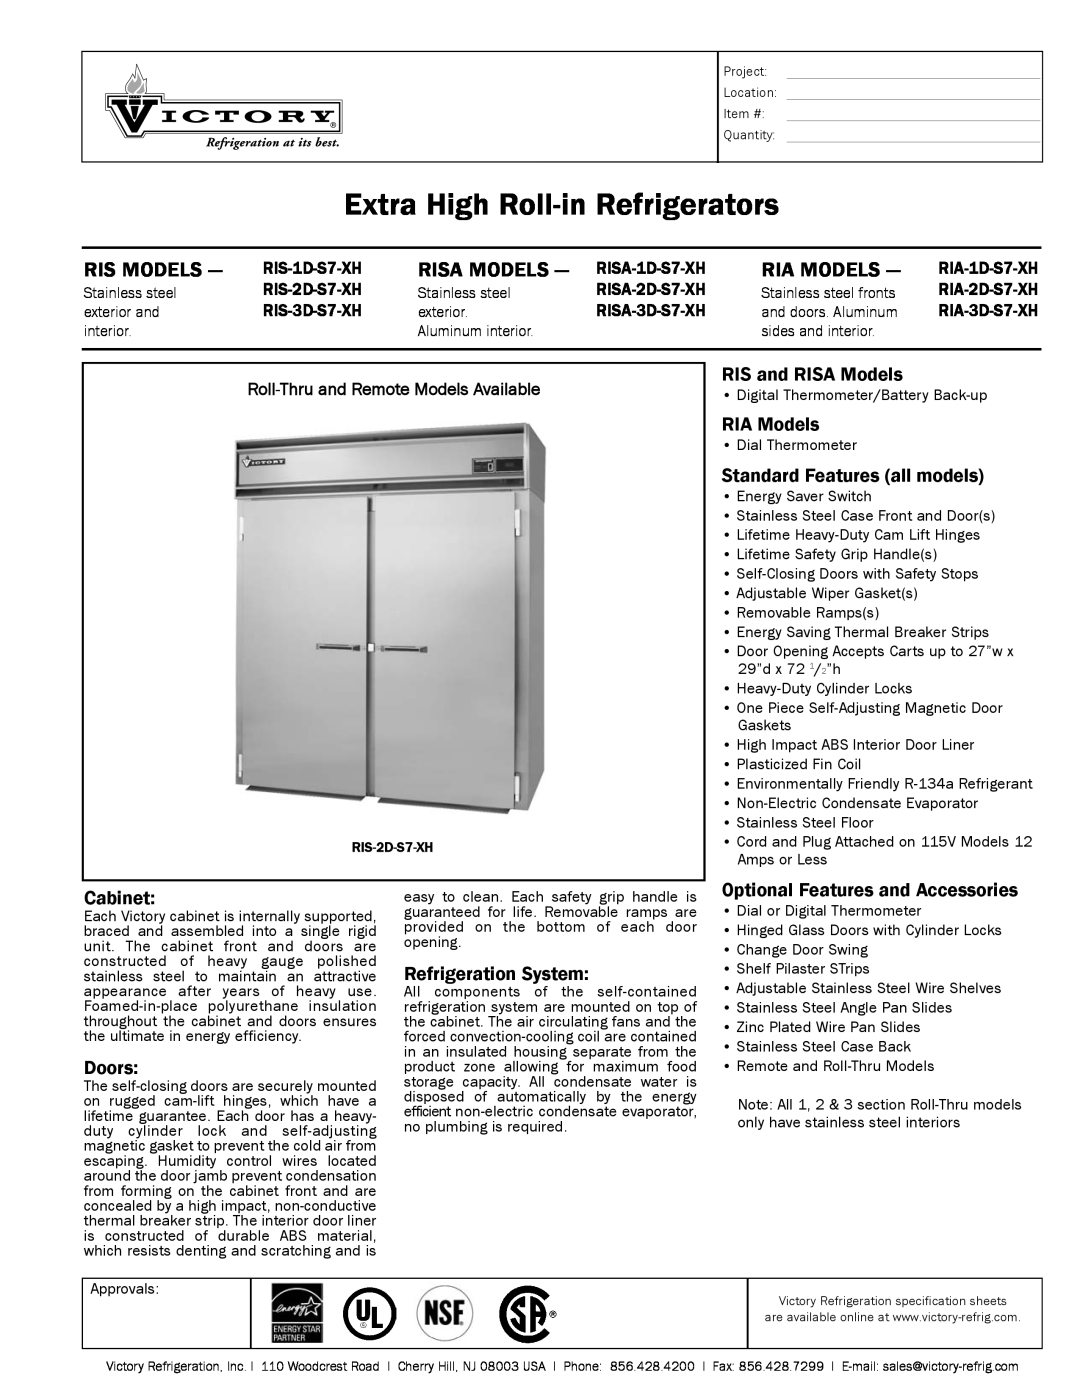 Victory Refrigeration RISA-1D-S7-XH specifications Extra High Roll-inRefrigerators, Ris Models, Risa Models, Ria Models 